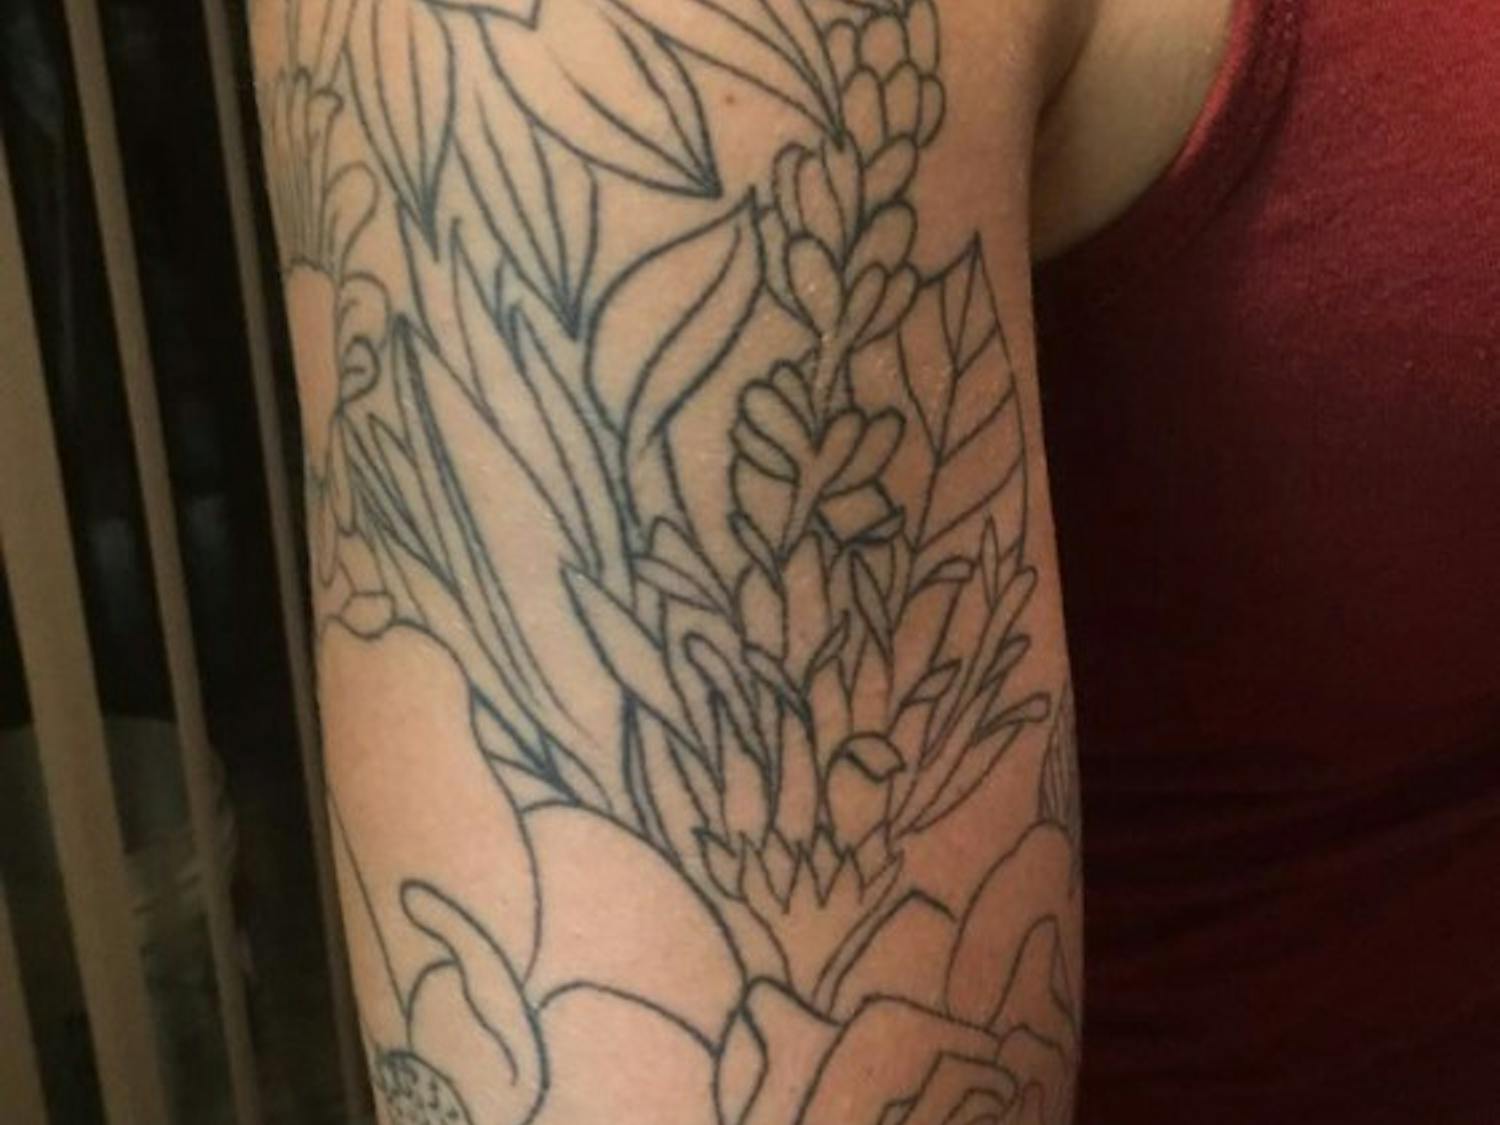 Sarah Grayce Coats' tattoo represents family.